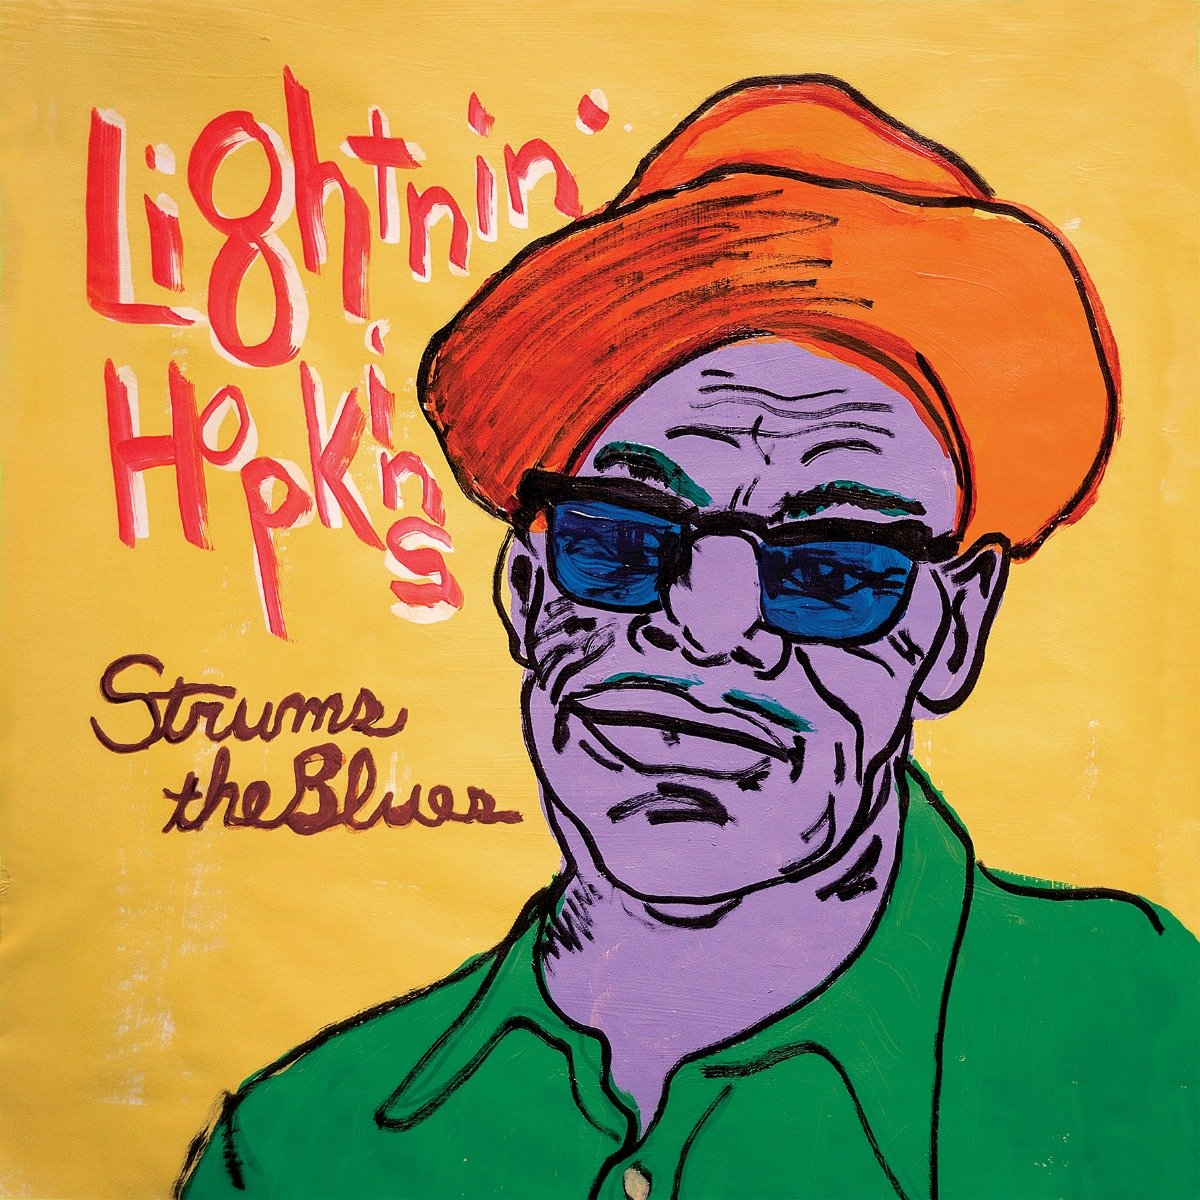 Lightnin' Hopkins Strums The Blues twelve inch vinyl cover